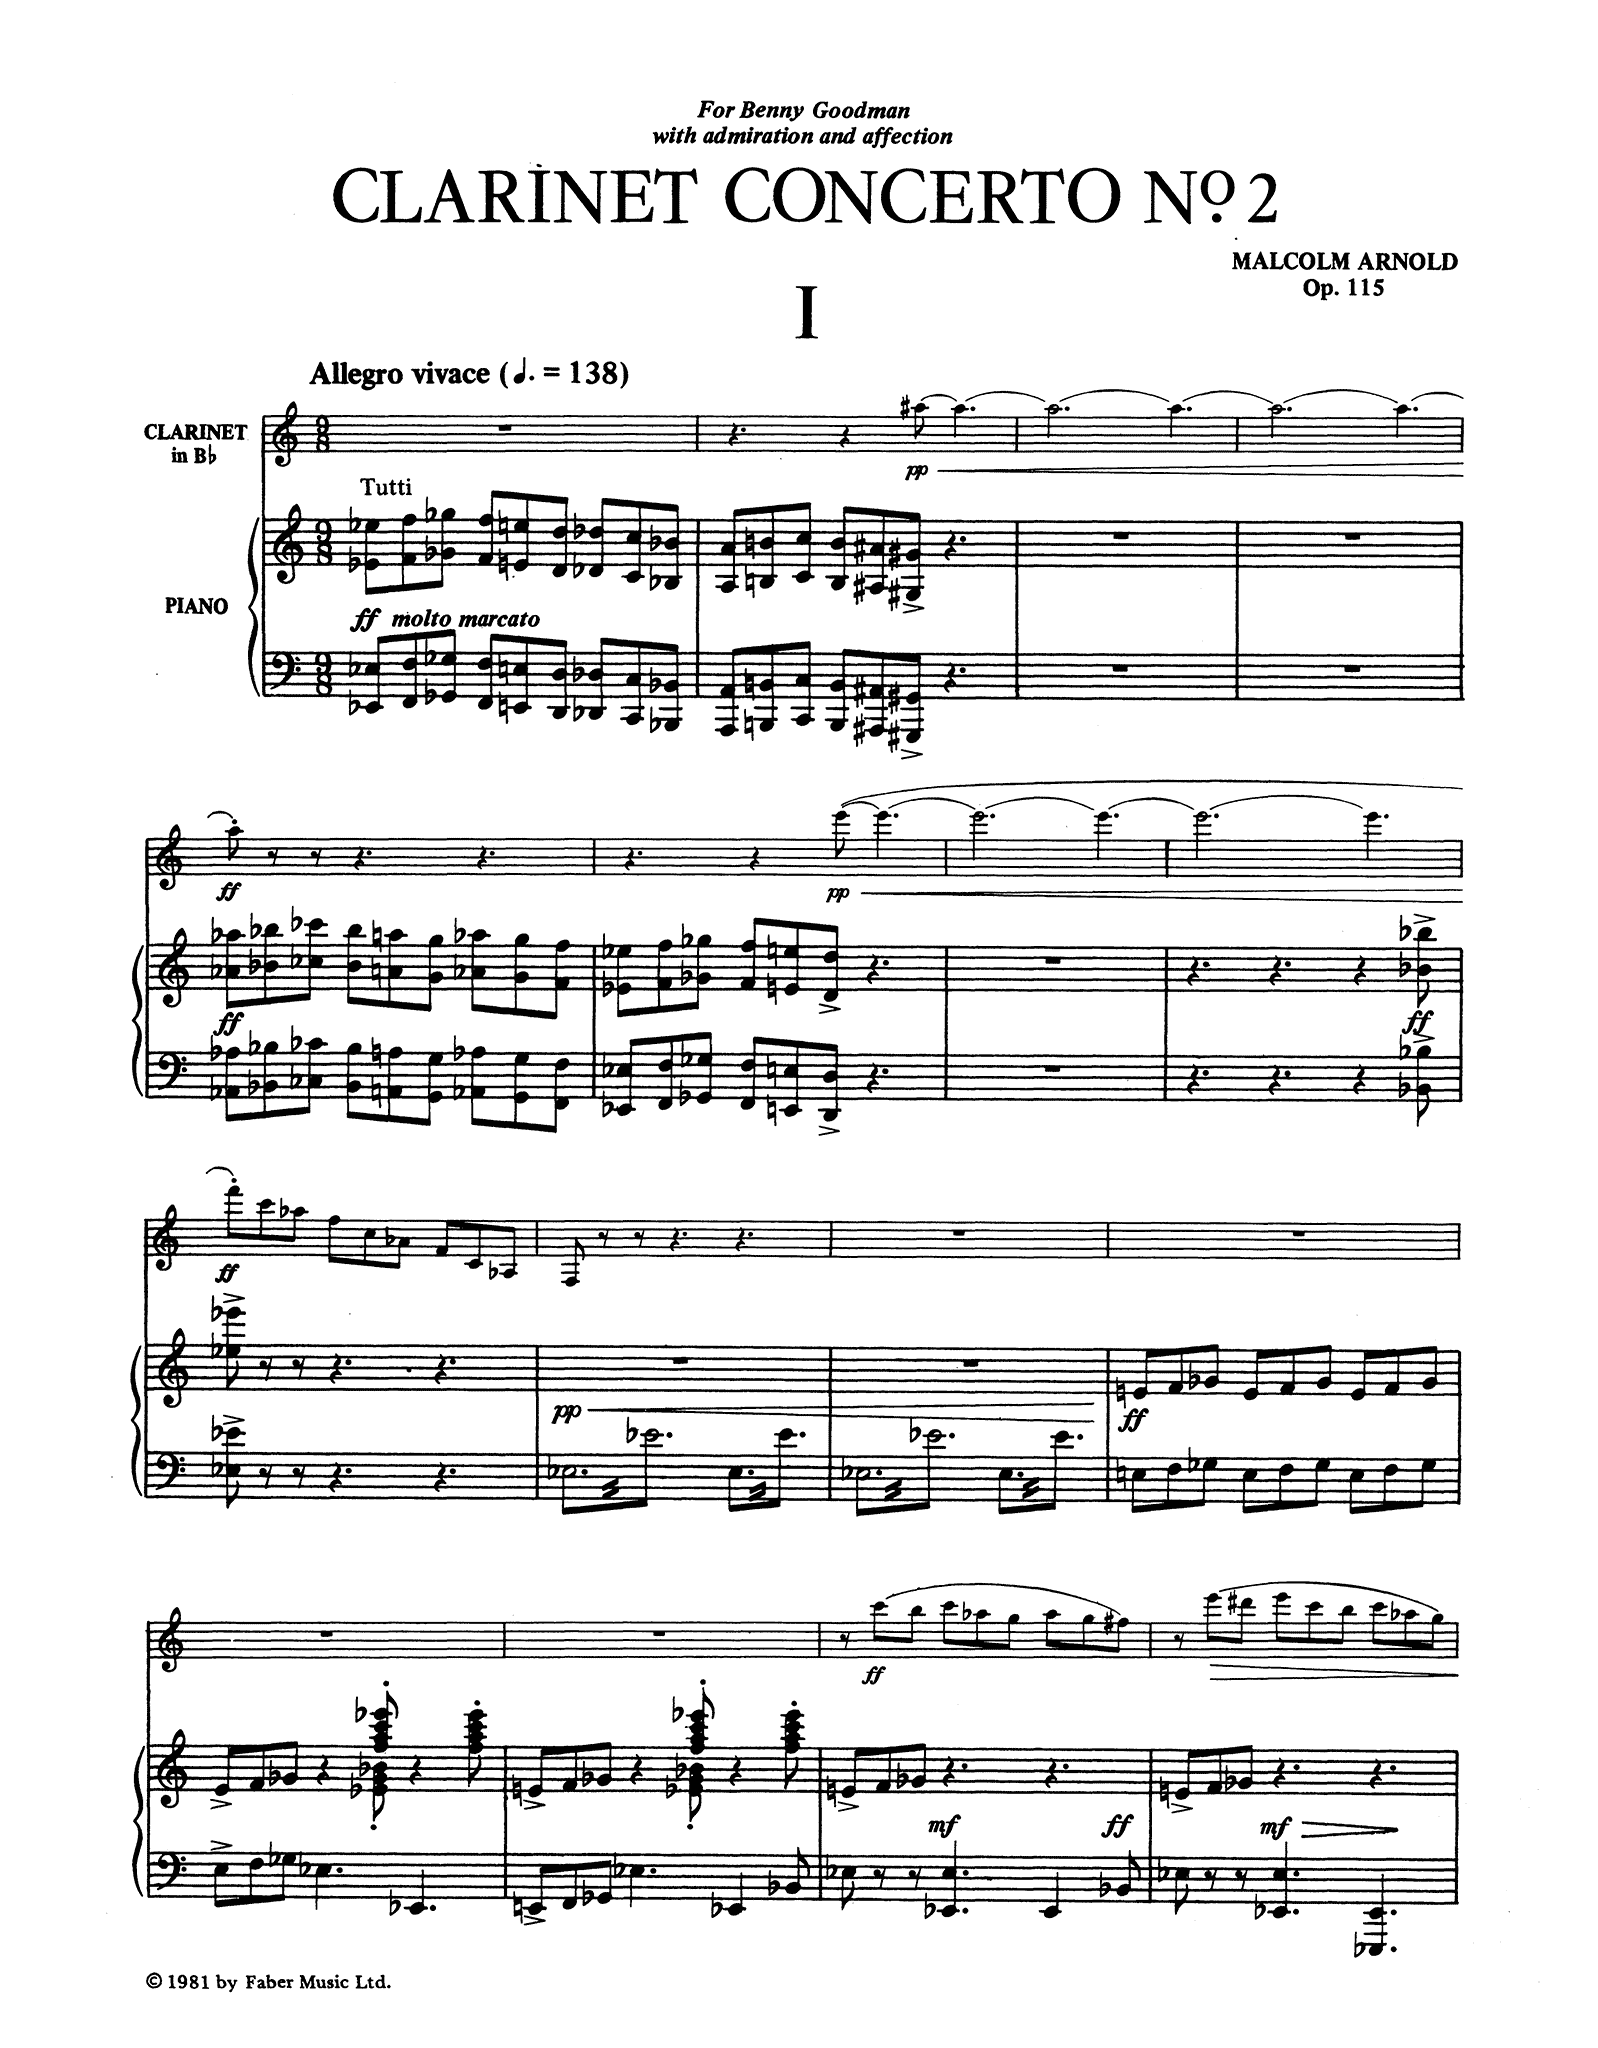 Arnold Clarinet Concerto No. 2, Op. 115 piano reduction - Movement 1